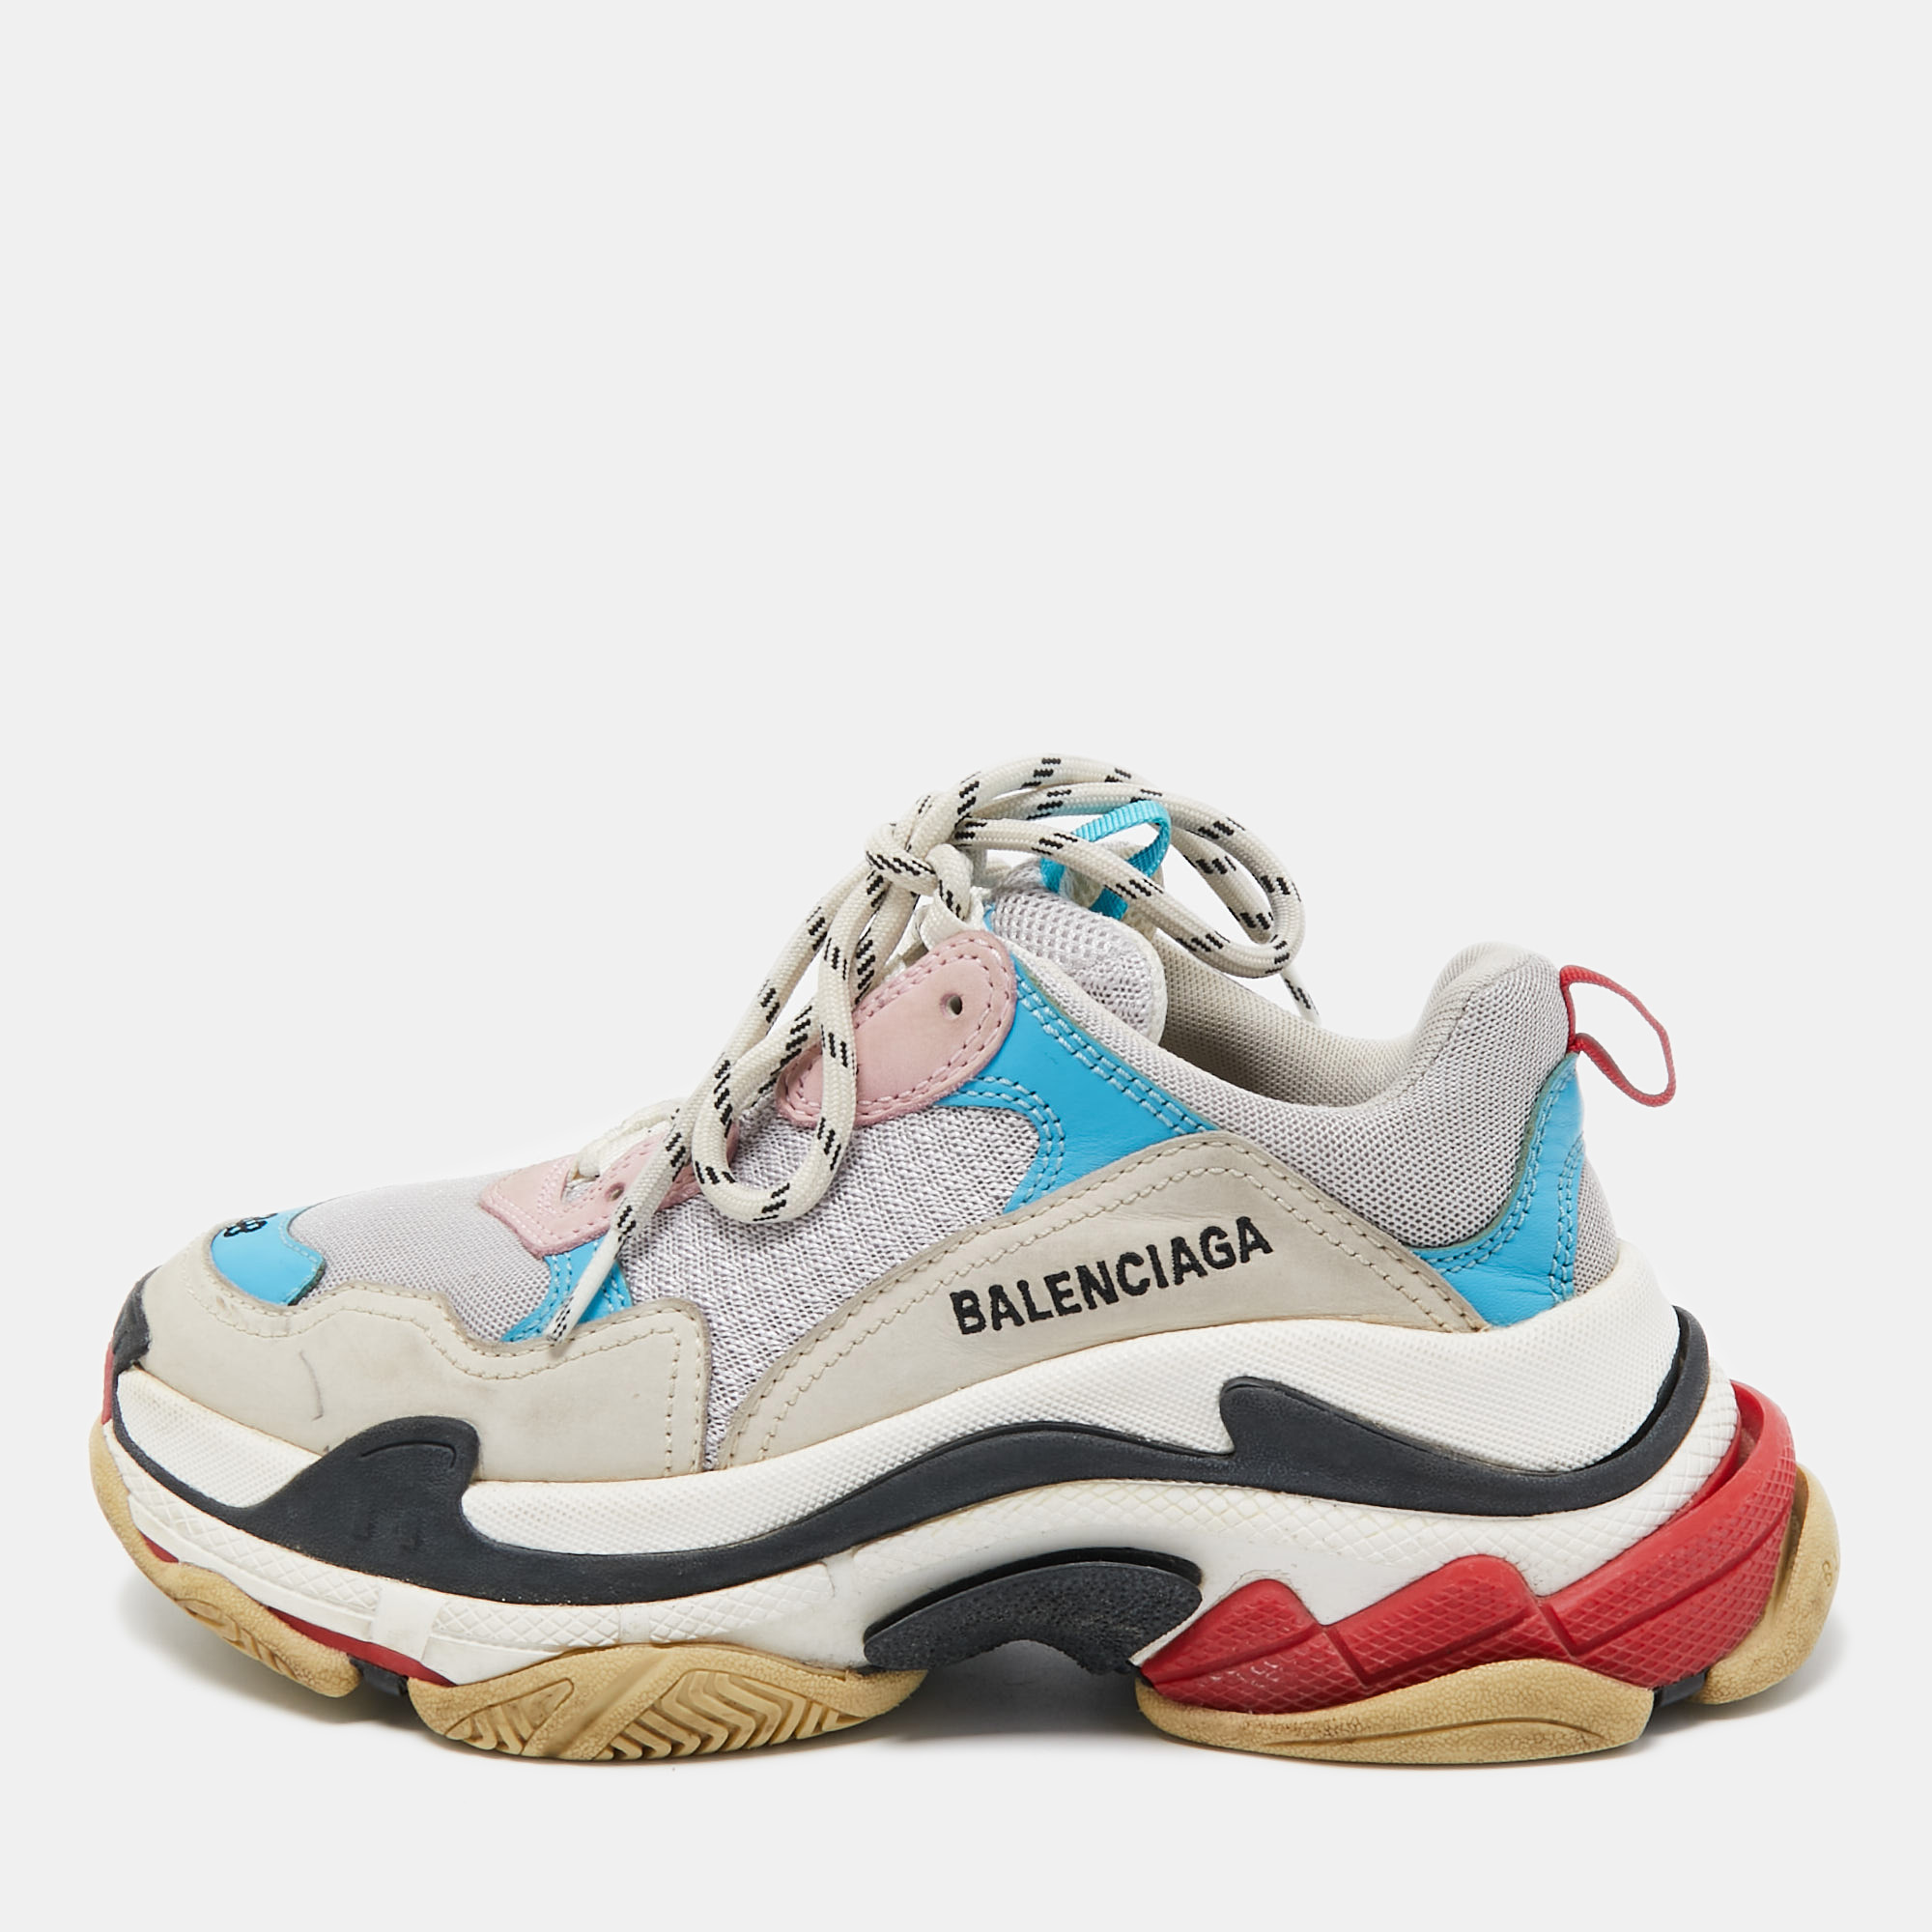 Balenciaga Multicolor Nubuck And Mesh Triple S Sneakers Size 38